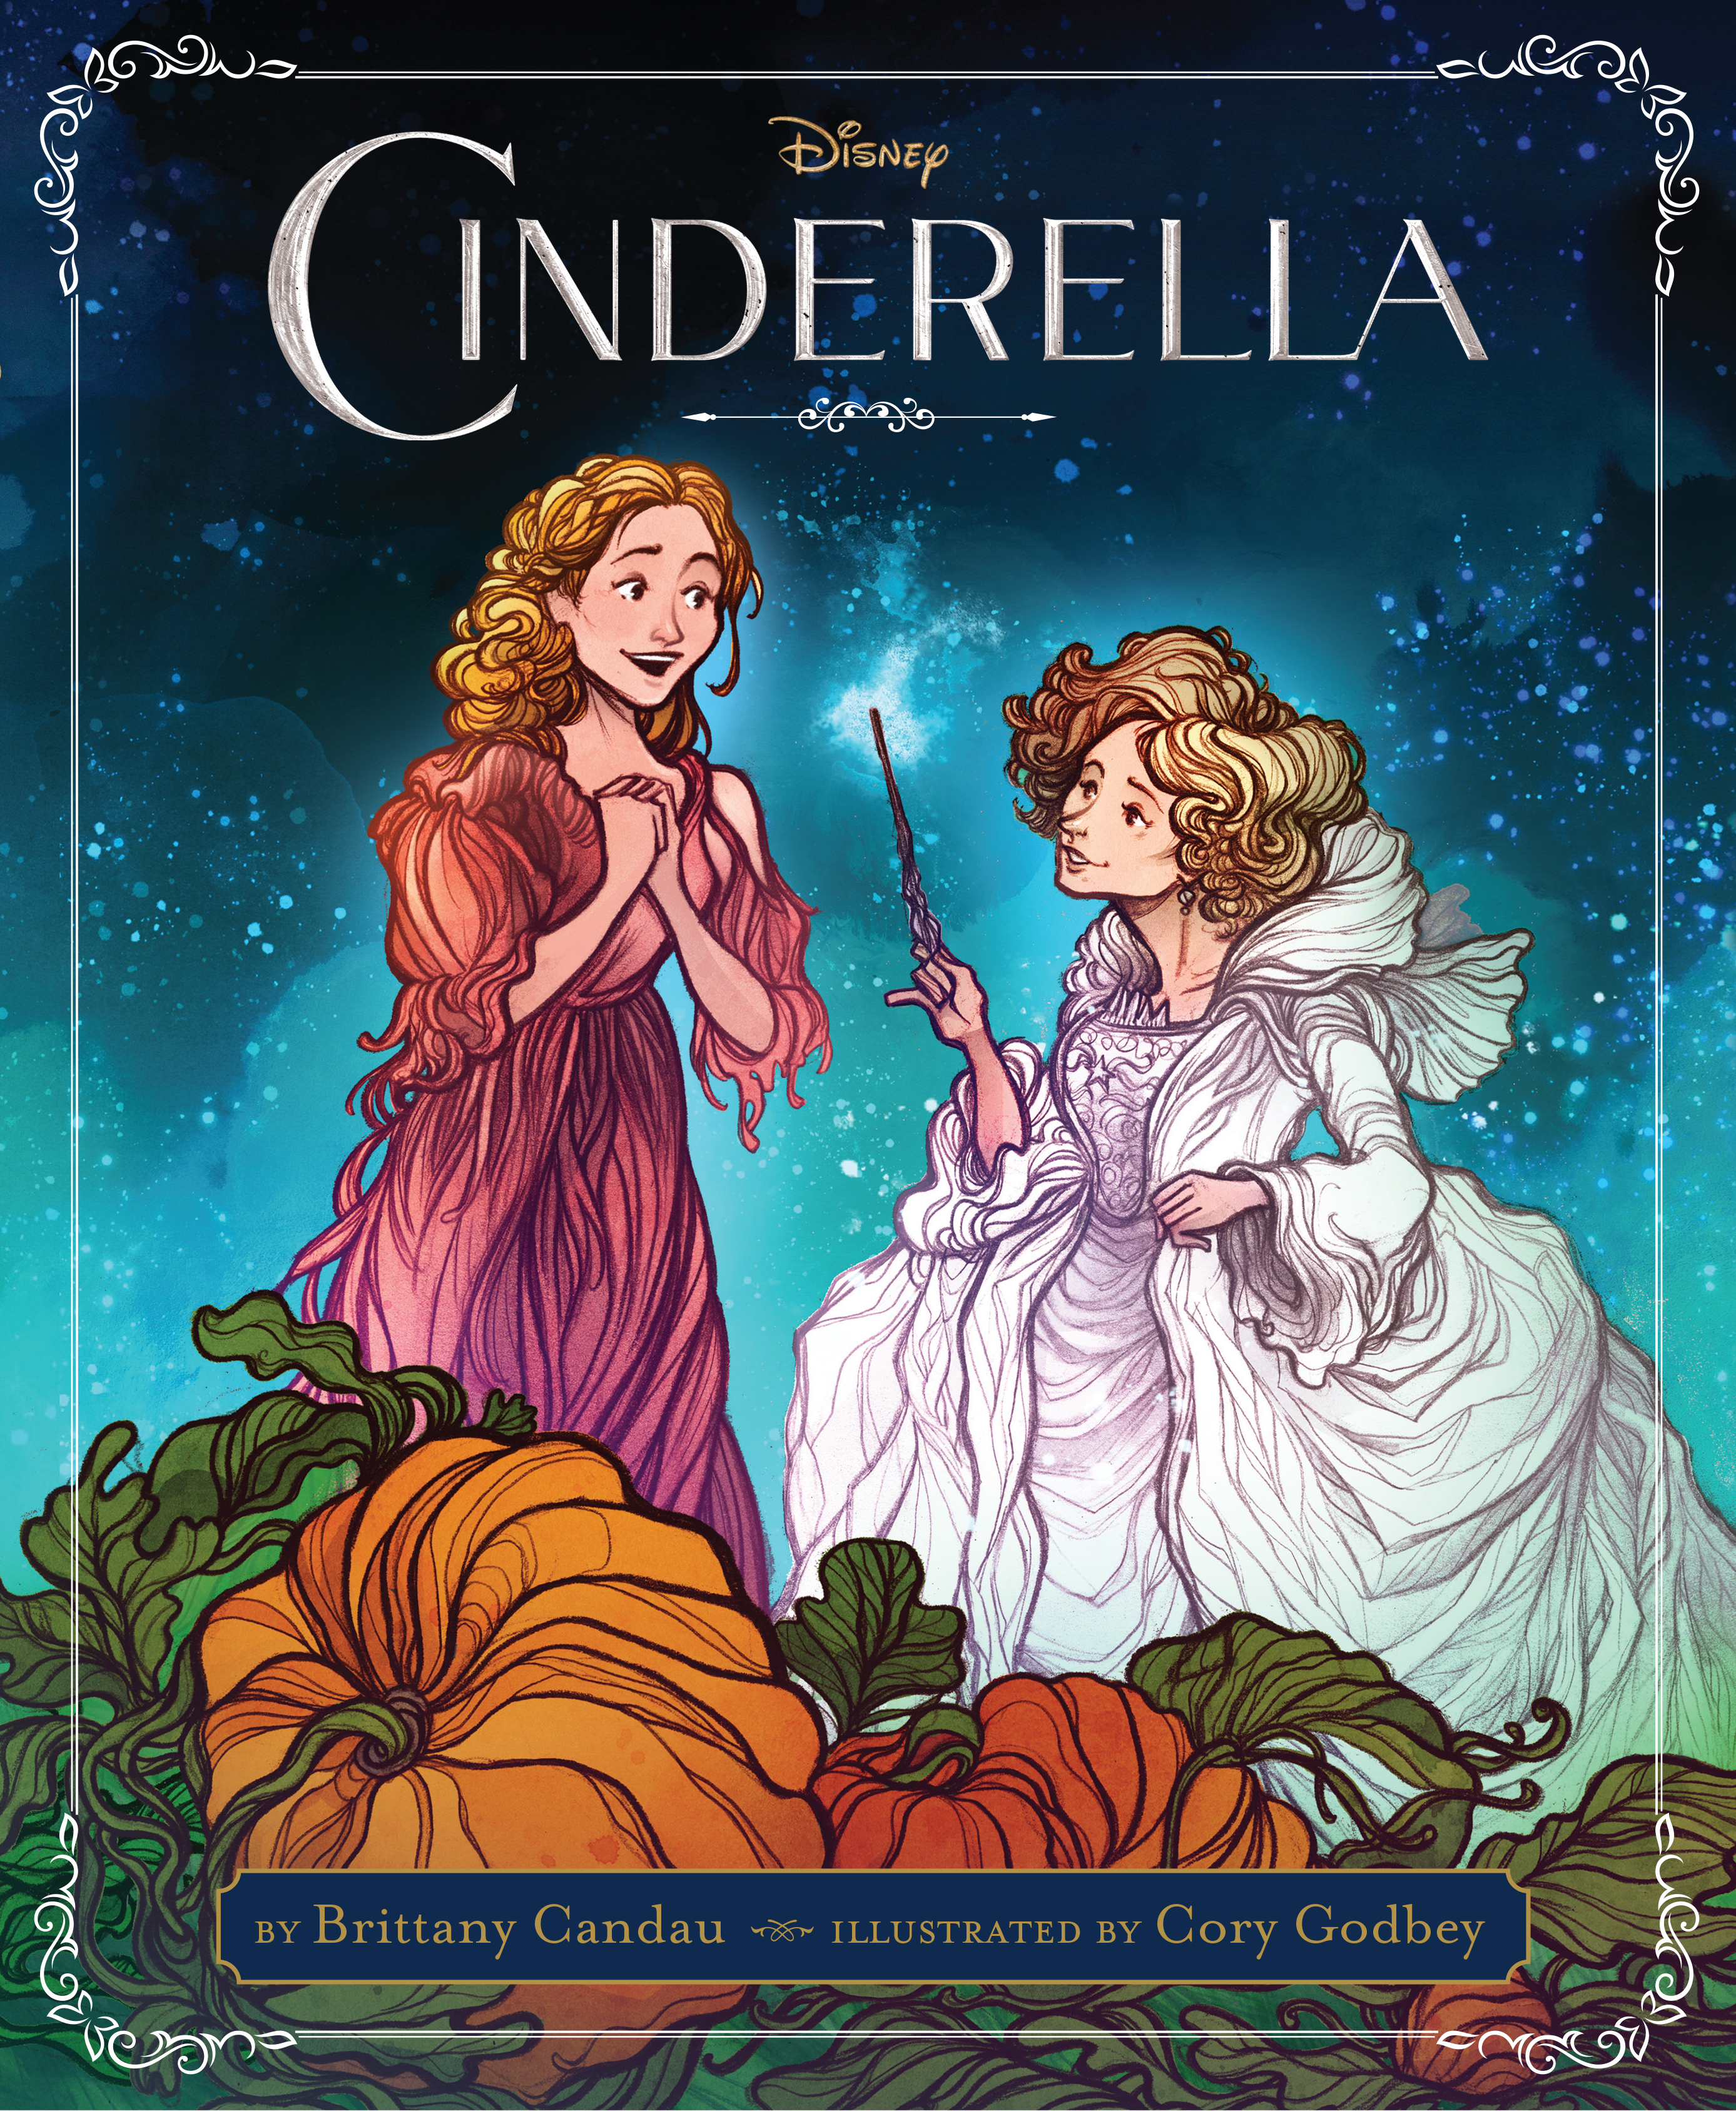 book review of cinderella